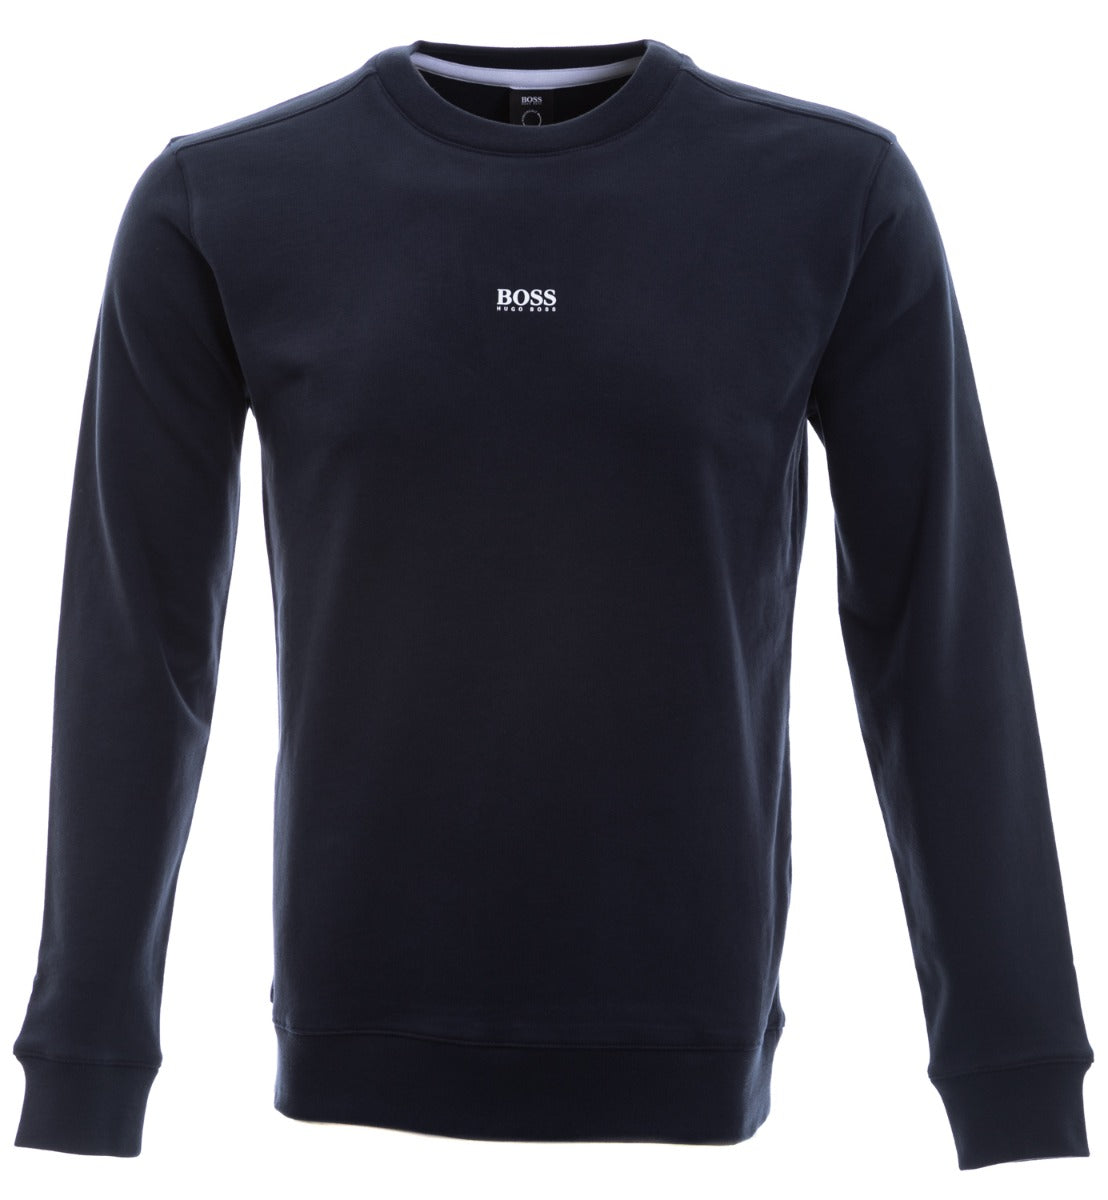 BOSS Weevo 2 Sweatshirt in Navy